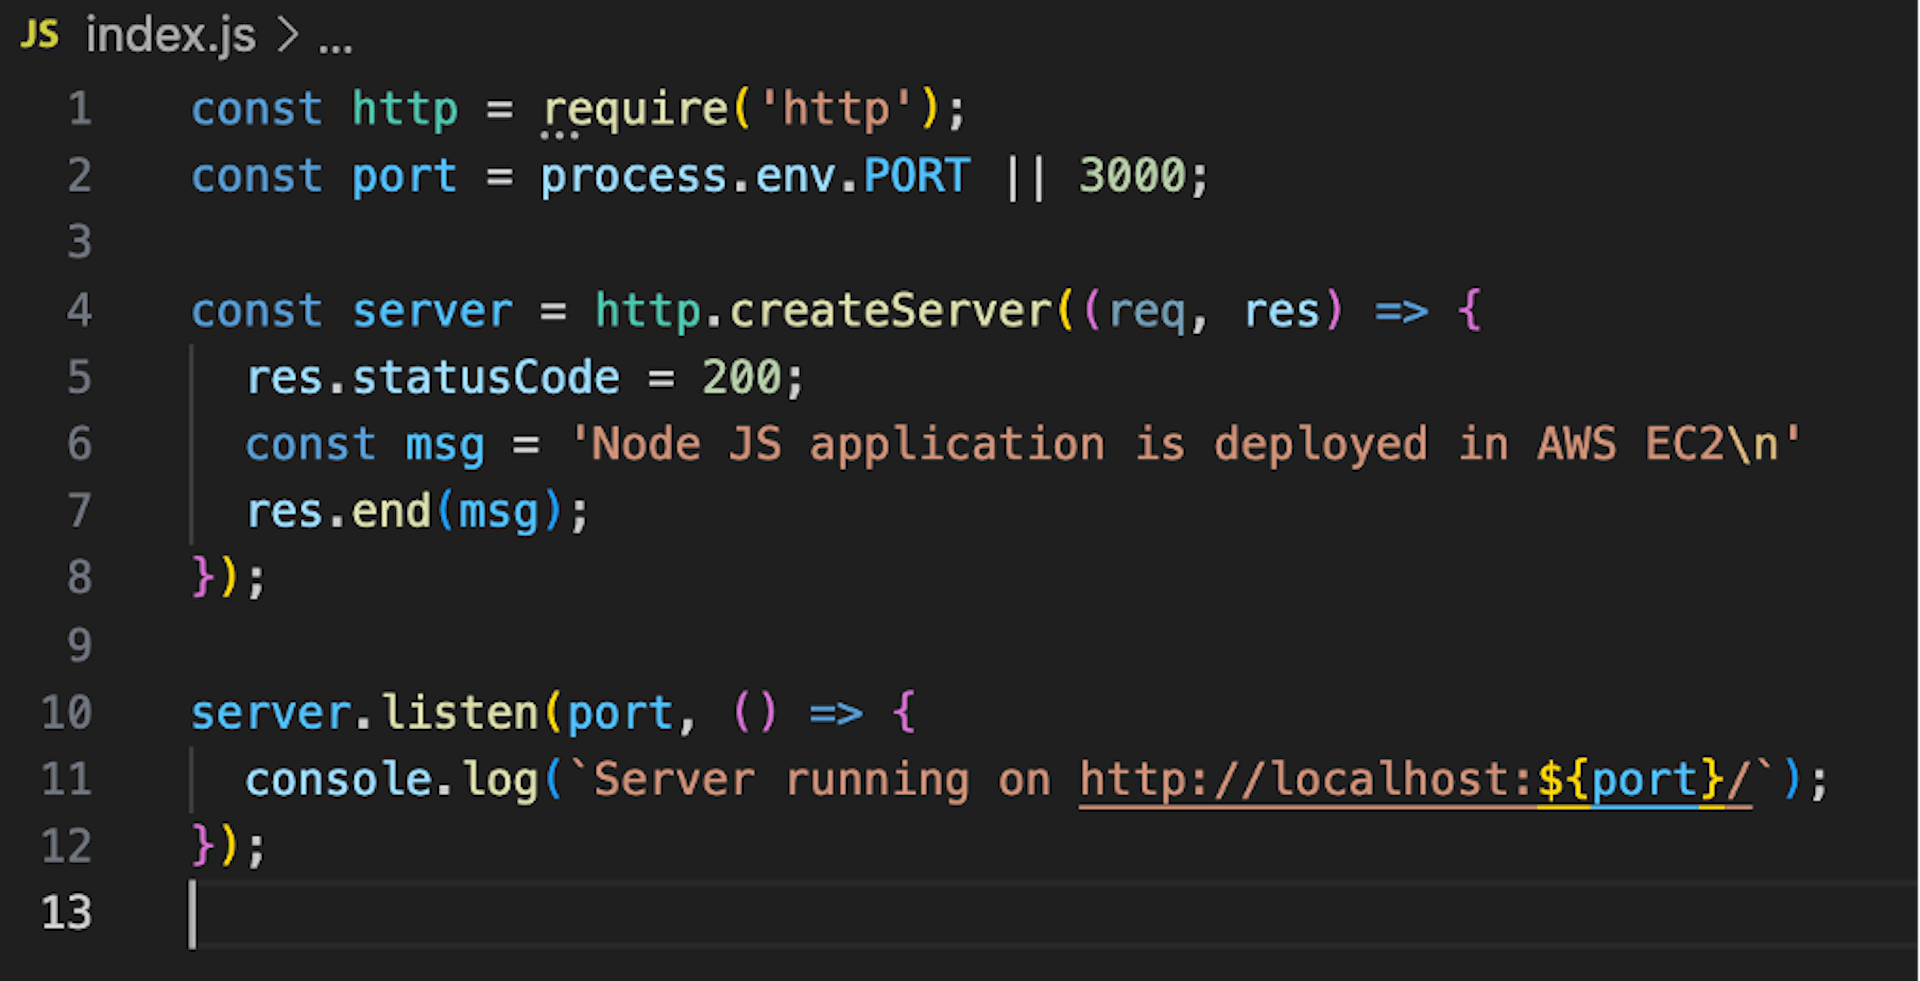 Node JS code to deploy